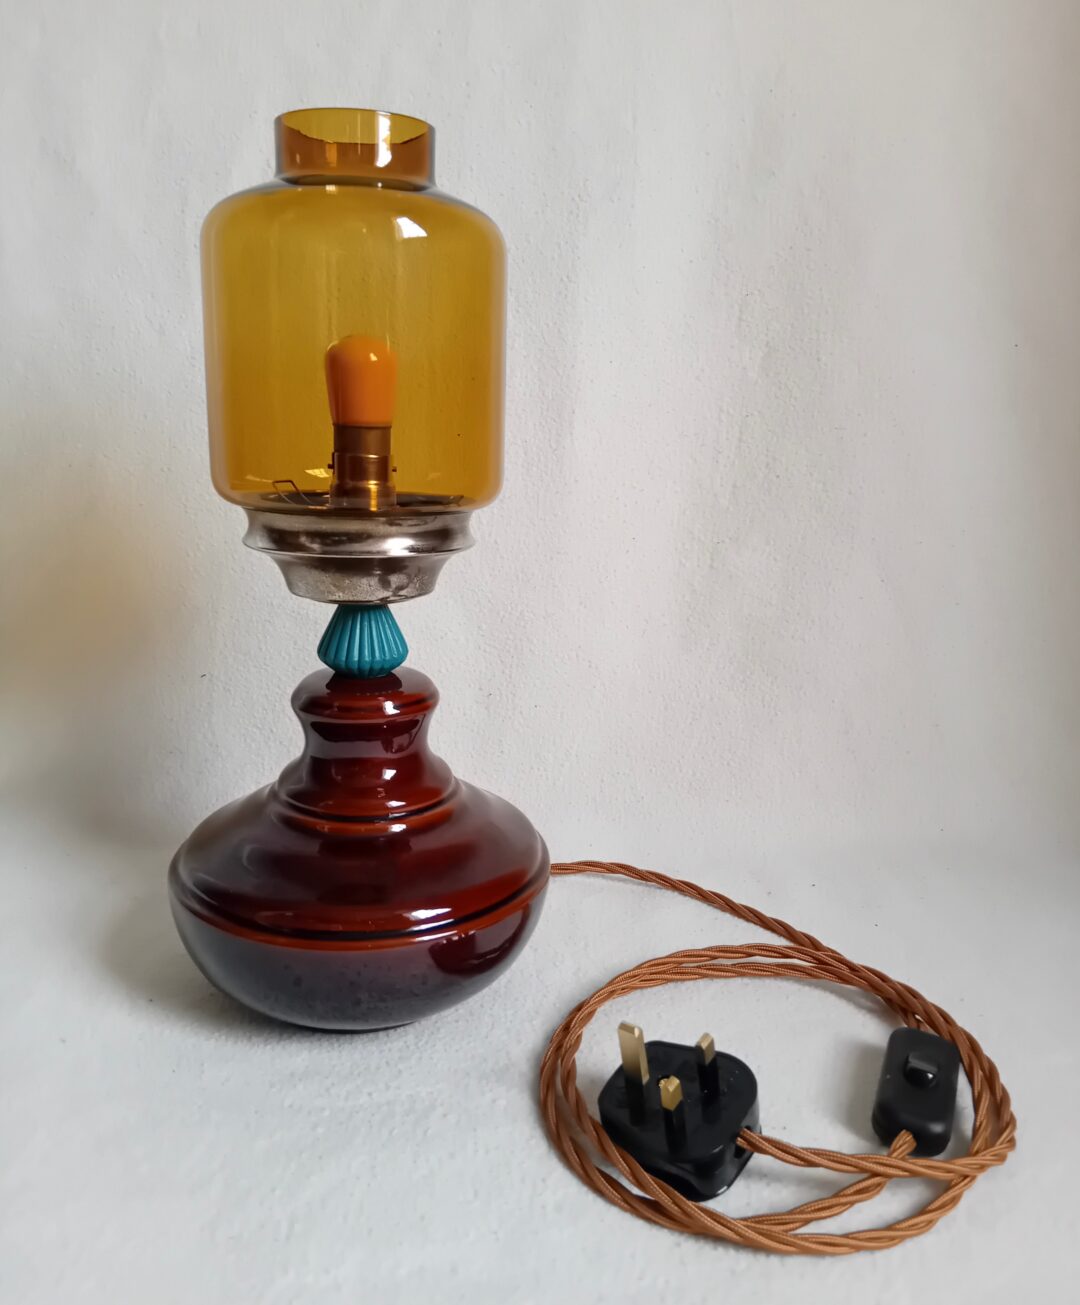 A unique ceramic table lamp by Fiona Bradshaw Designs